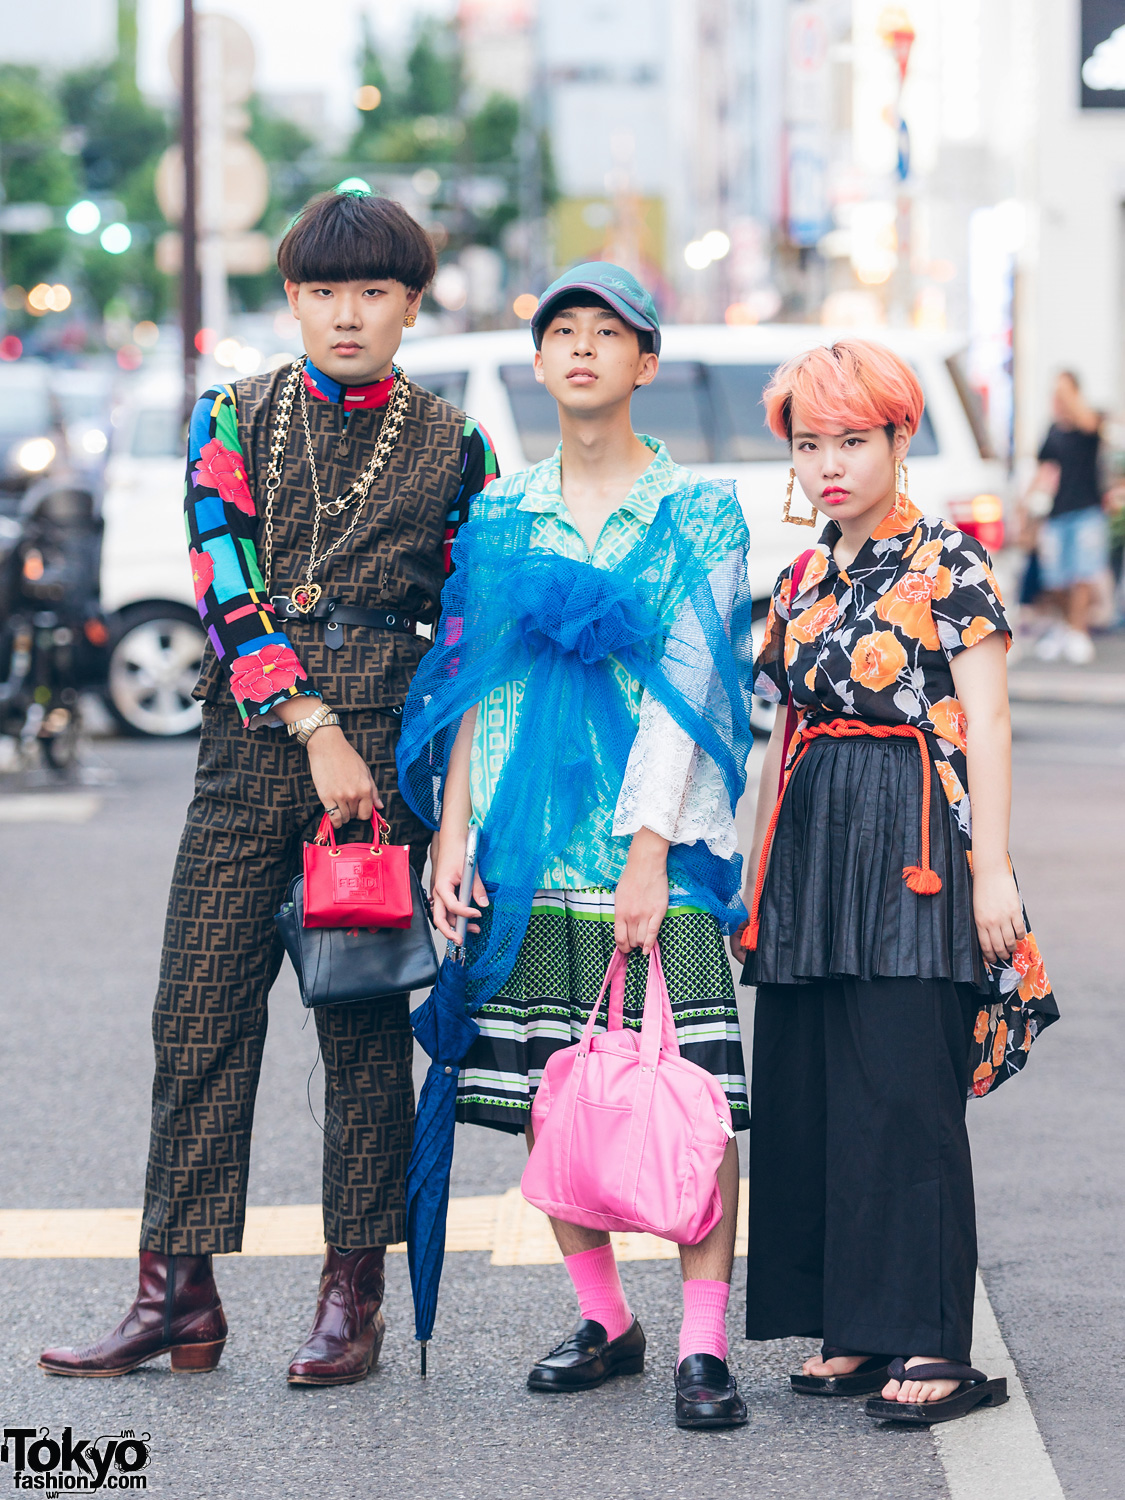 Vintage & Mixed Print Harajuku Street Styles w/ Pinnap, Fendi, Haruta ...